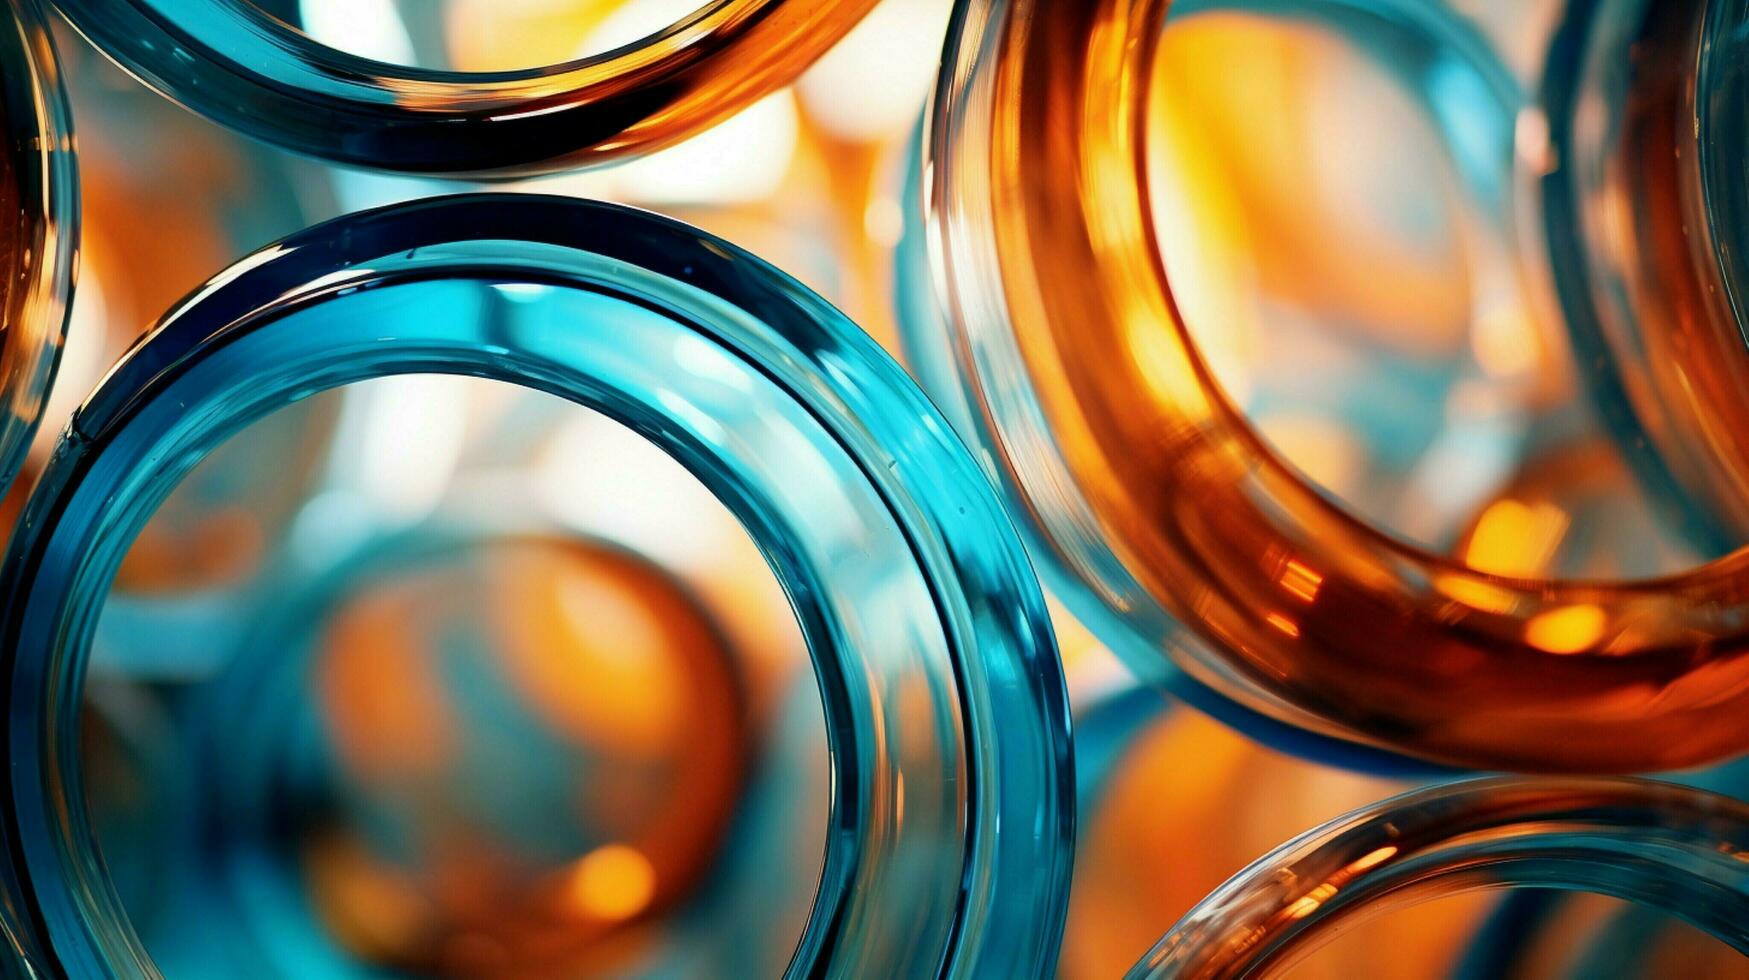 abstract glass circle pattern zoom lens creates creativity photo